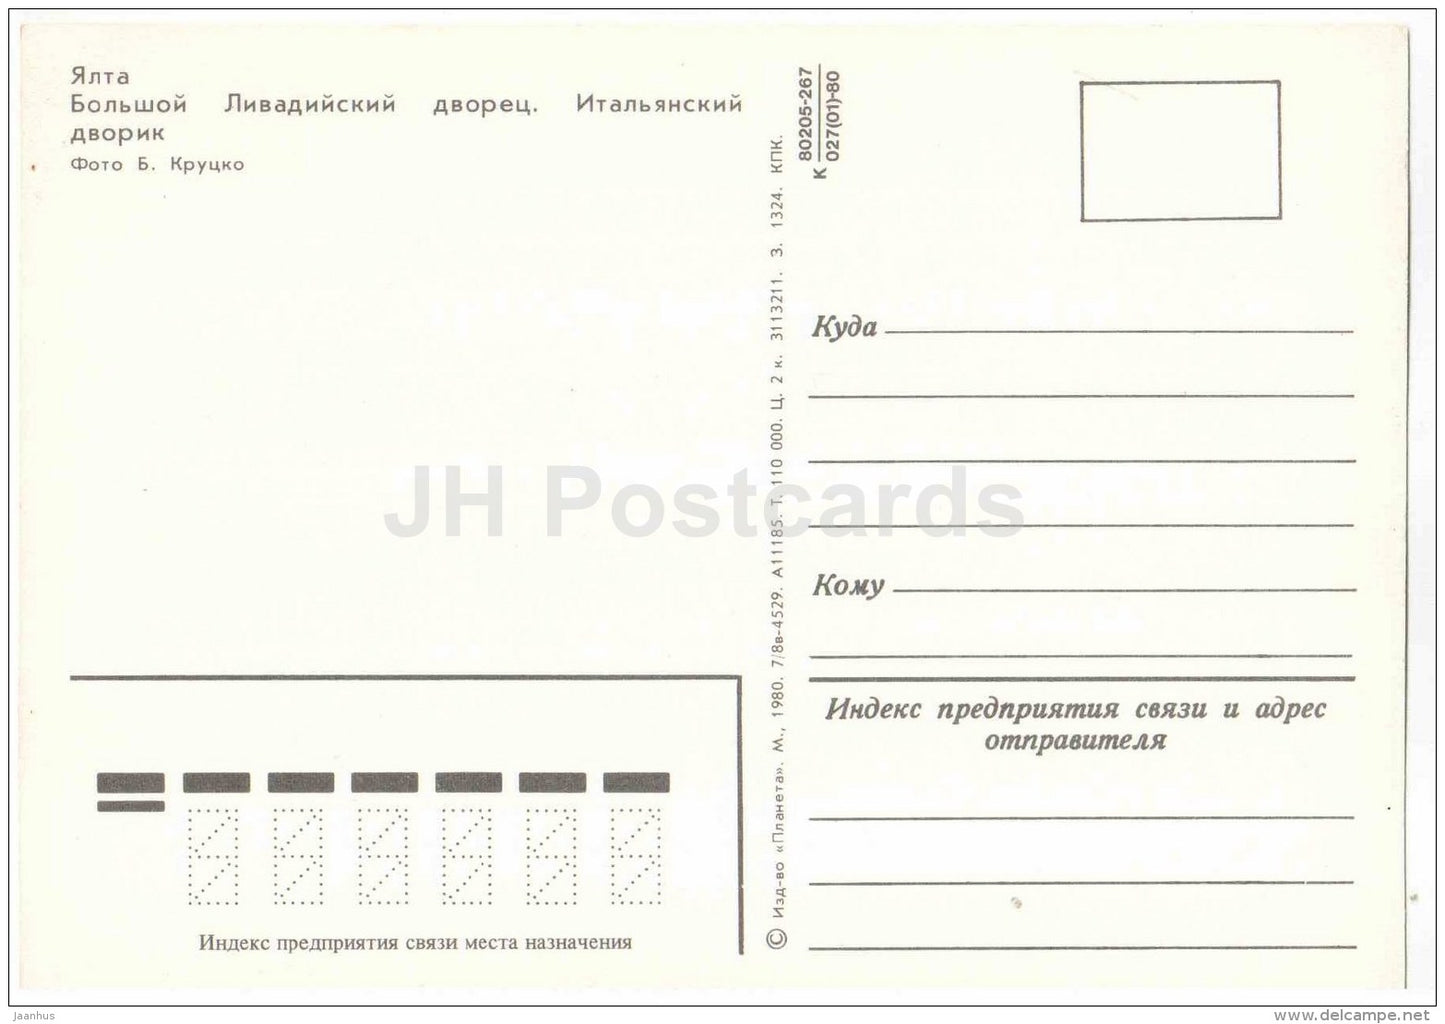 Italian courtyard - Grand Livadia Palace - Yalta - Crimea - 1980 - Ukraine USSR - unused - JH Postcards